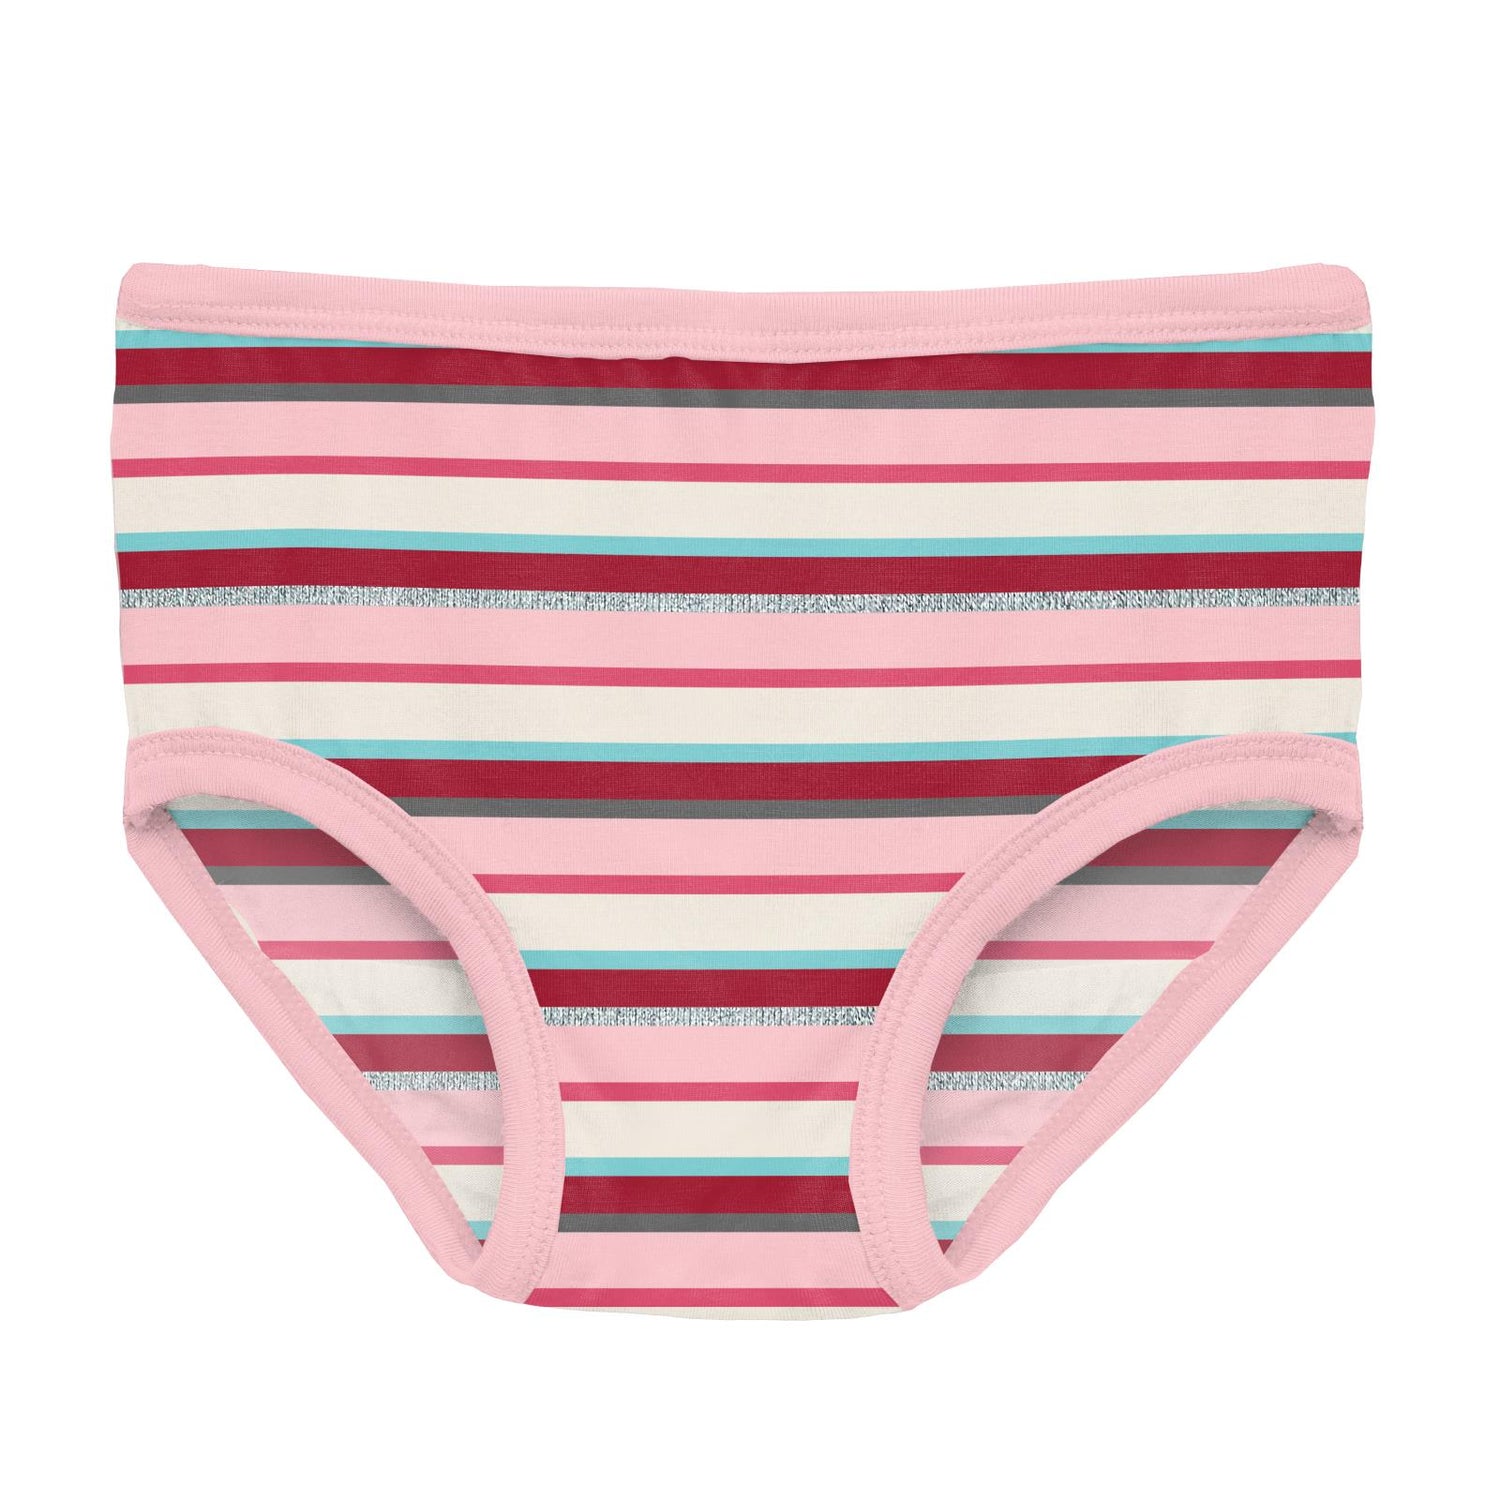 Print Girl's Underwear Set of 3 in Natural Tangled Kittens, Iceberg and Anniversary Bobsled Stripe